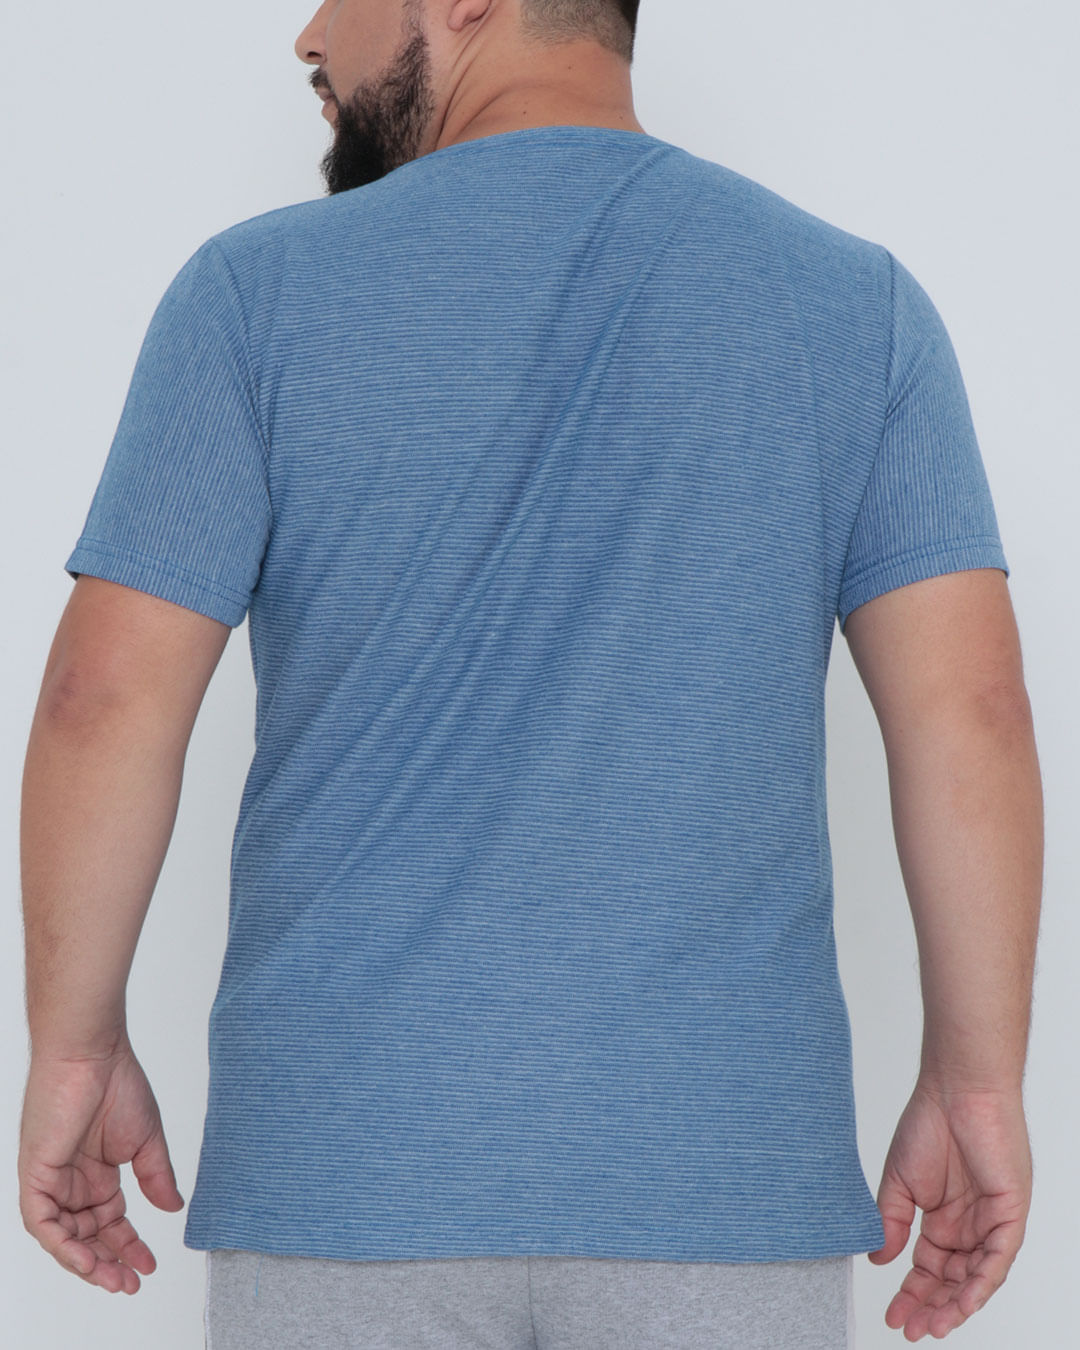 Camiseta-2096-Estampada-Plus---Azul-Outros